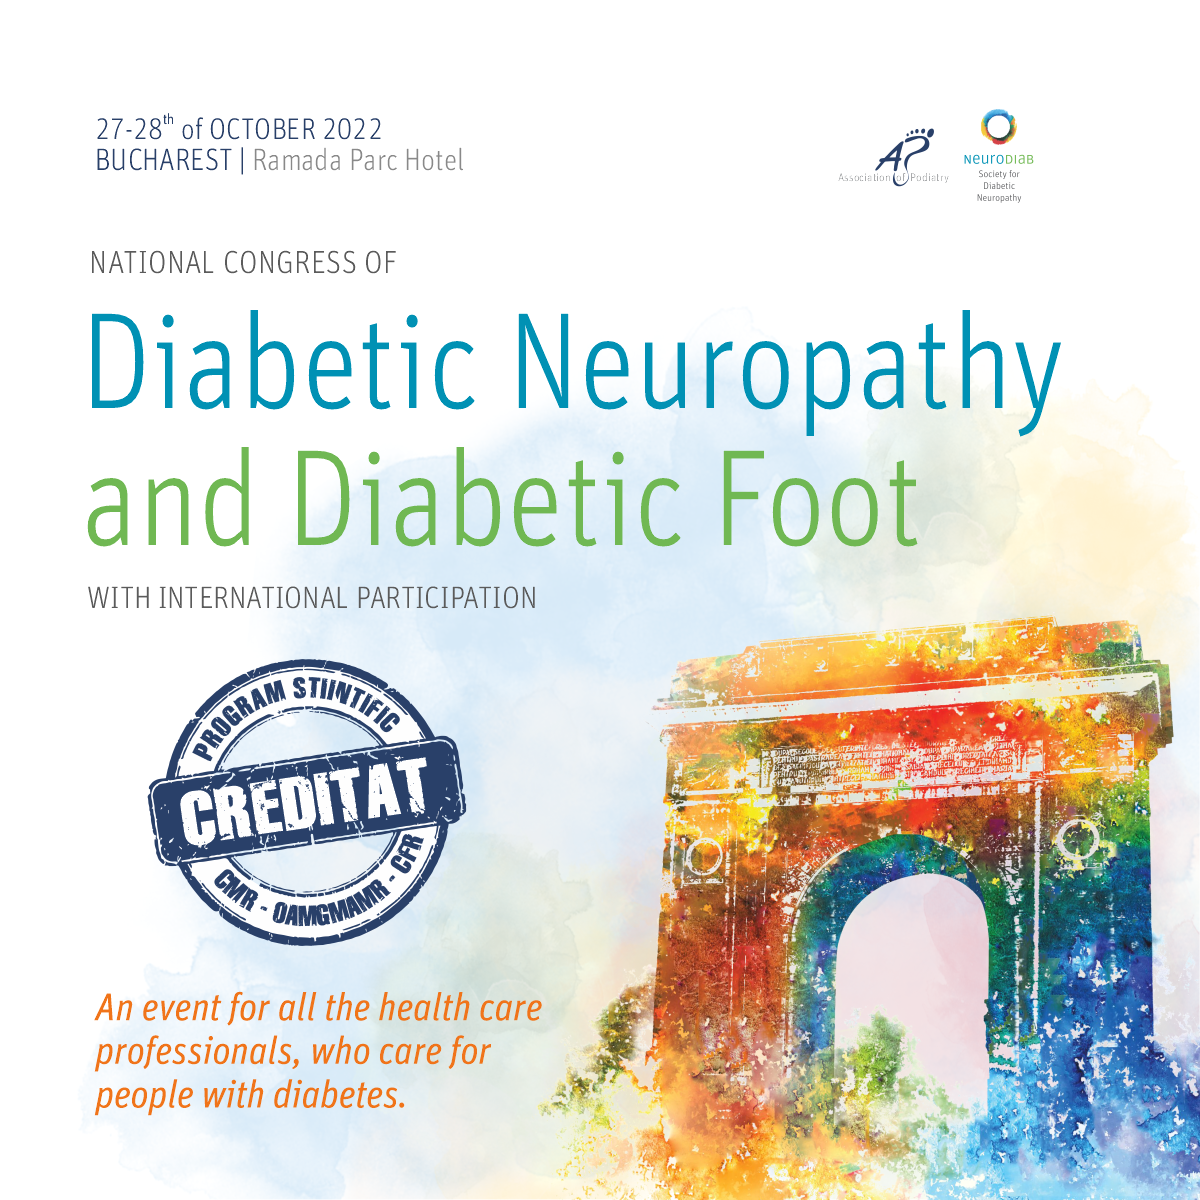 Congresul Național de Neuropatie Diabetică și Picior Diabetic